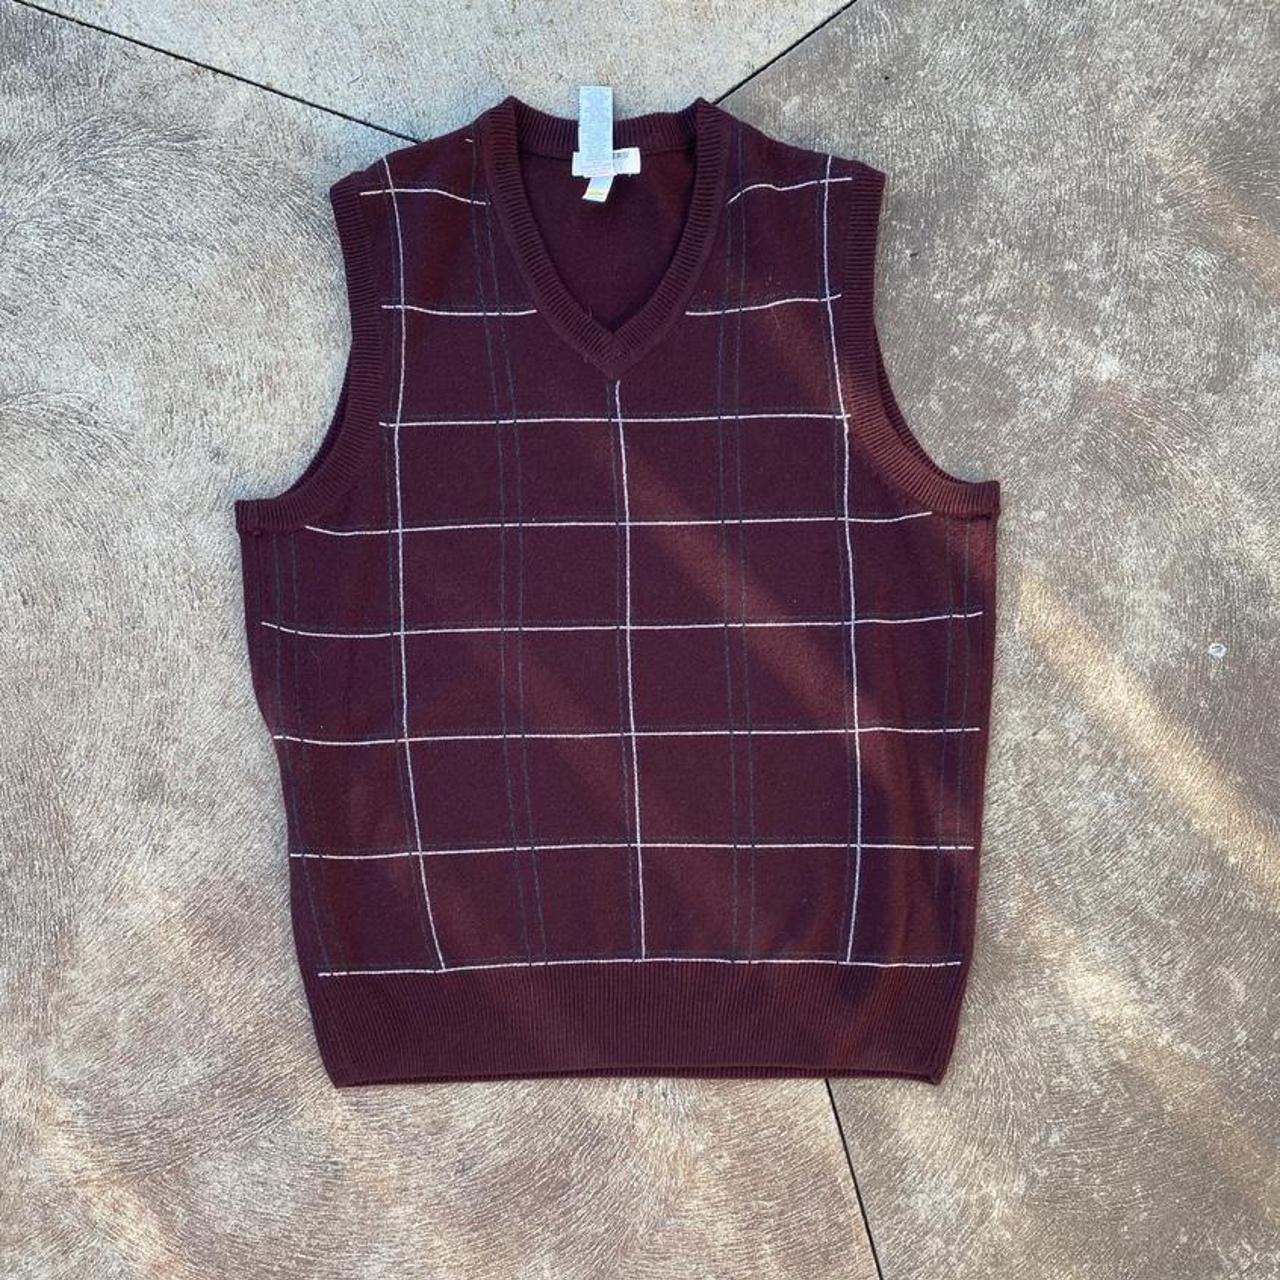 Product Image 2 - Maroon Sweater-vest
Super cute sweater vest.